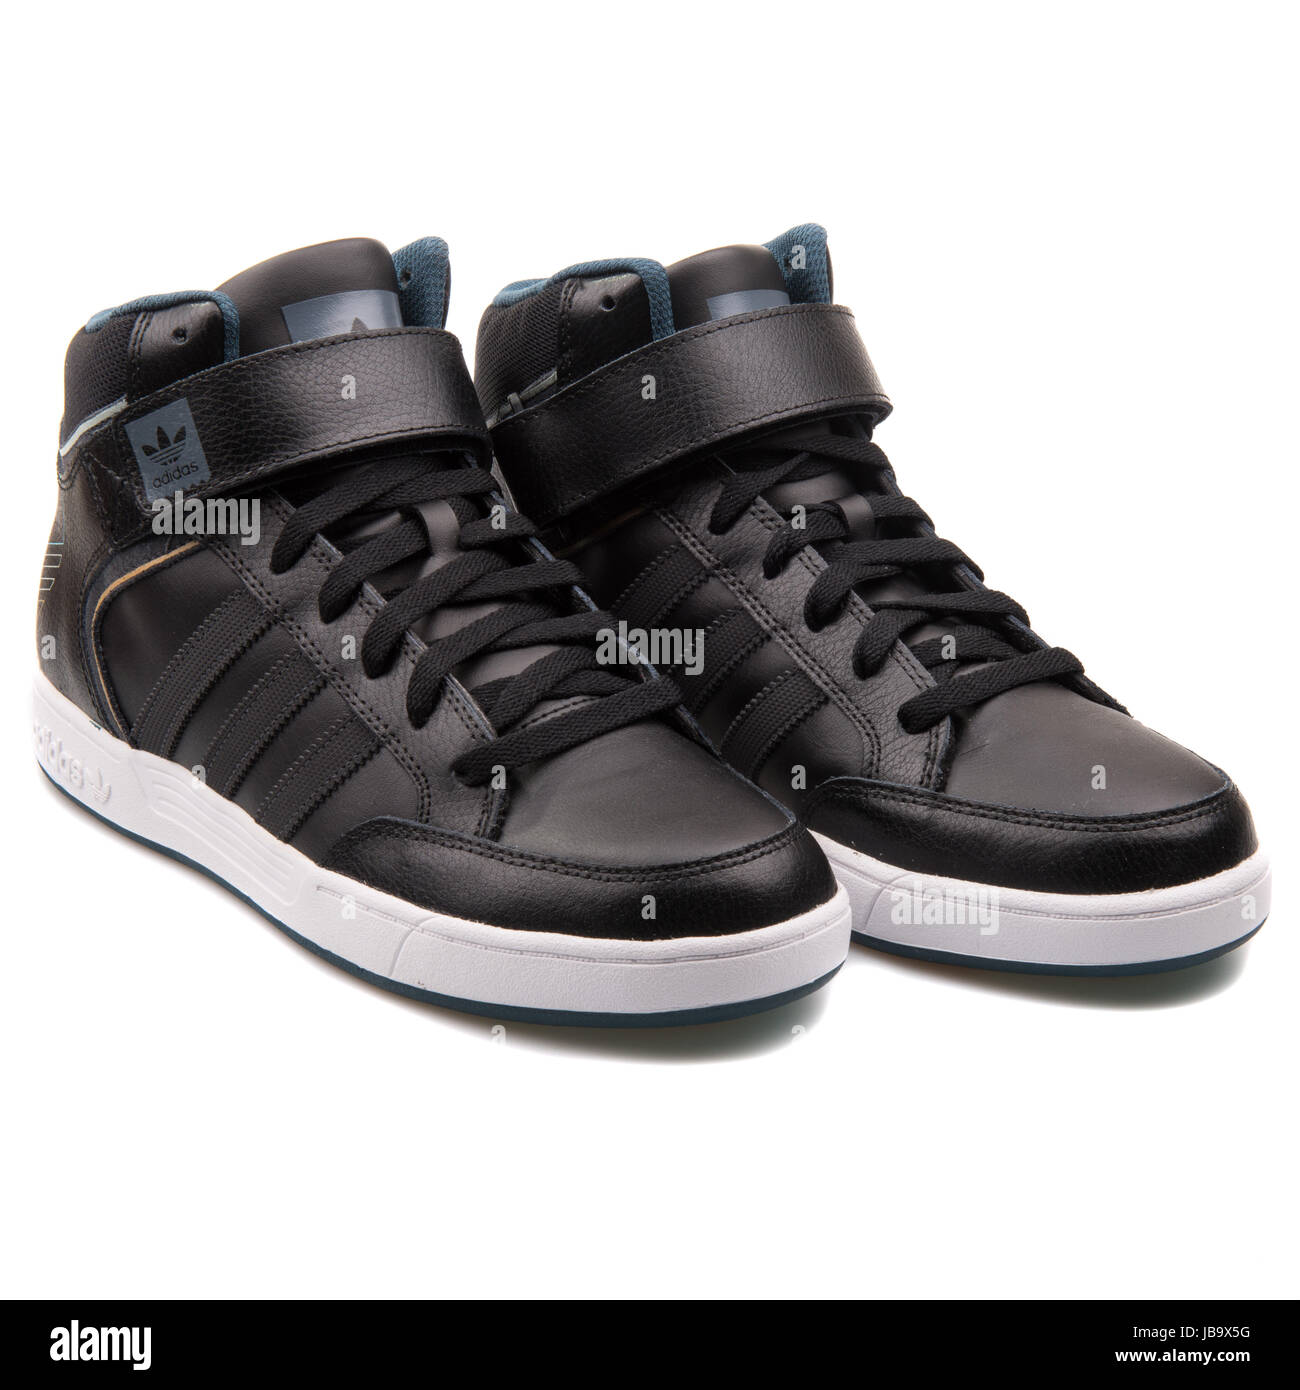 Adidas Varial Mid Hommes noir cuir Chaussures de basket-ball - D68664 Photo  Stock - Alamy